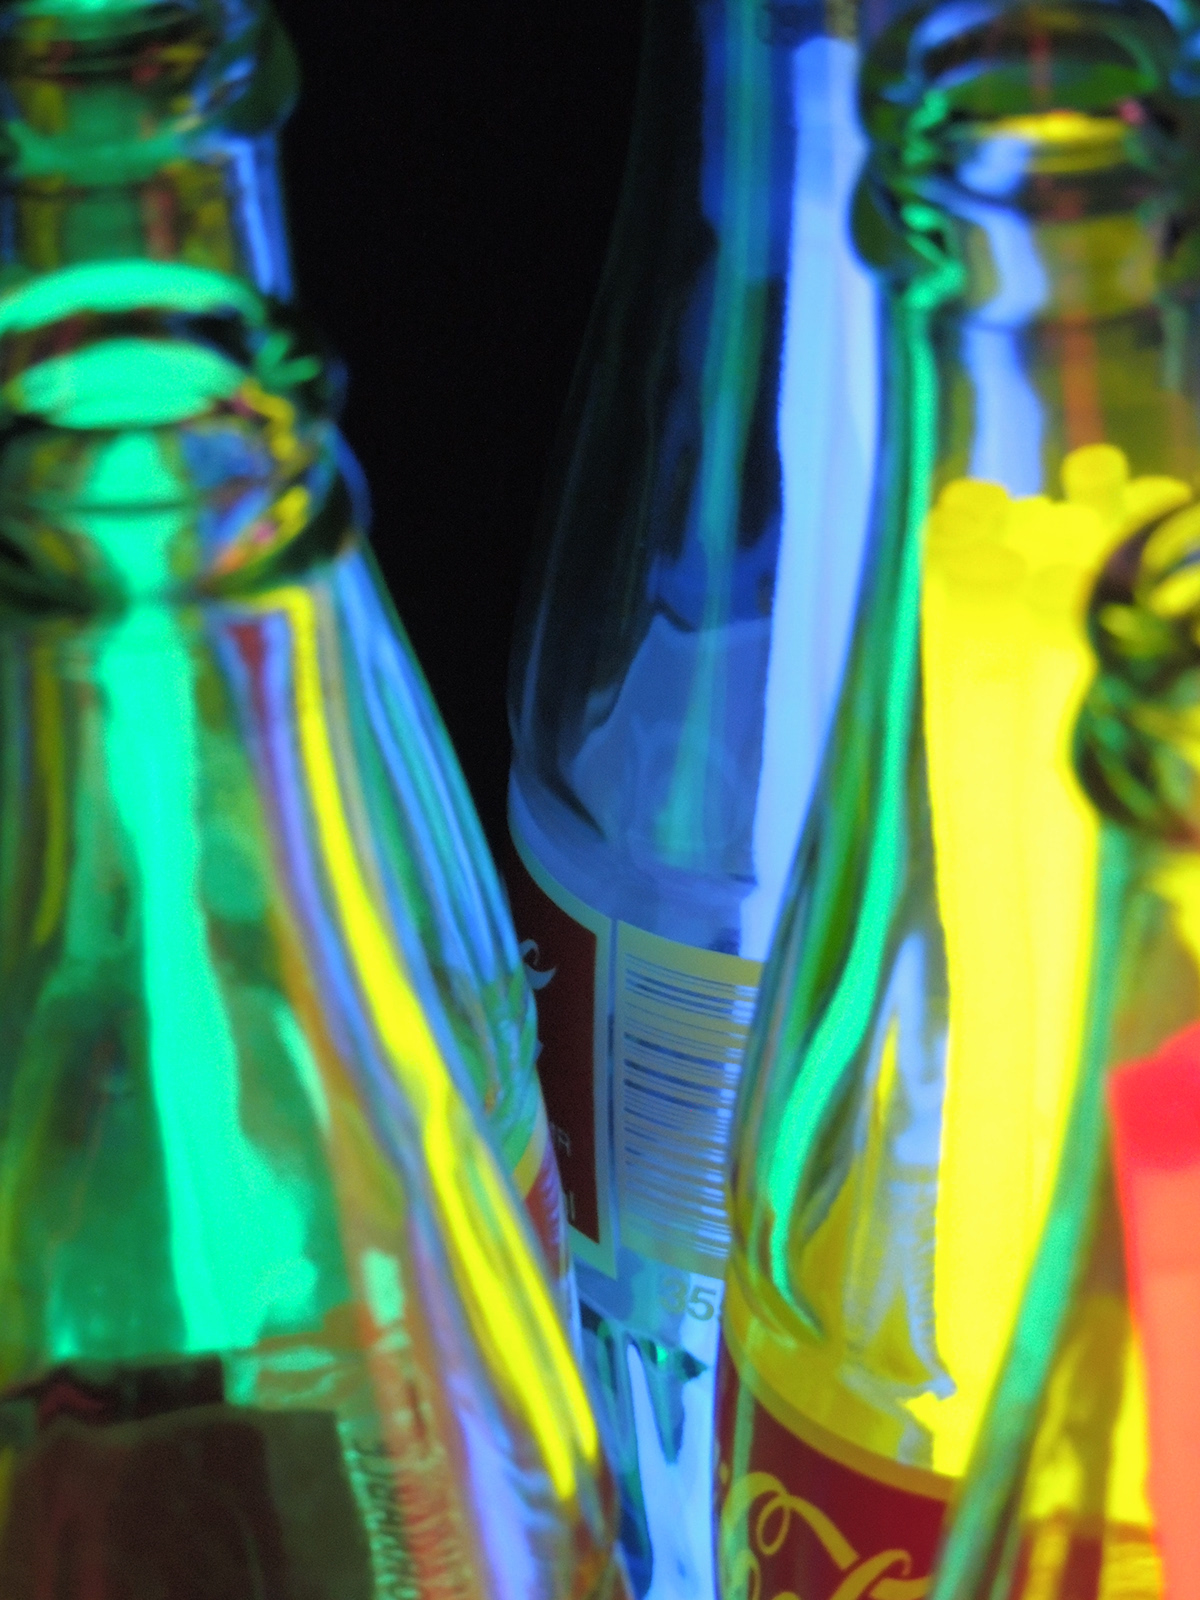 glowsticks bottles cola yellow green blue purple red neon lights abstract art depthoffield dark